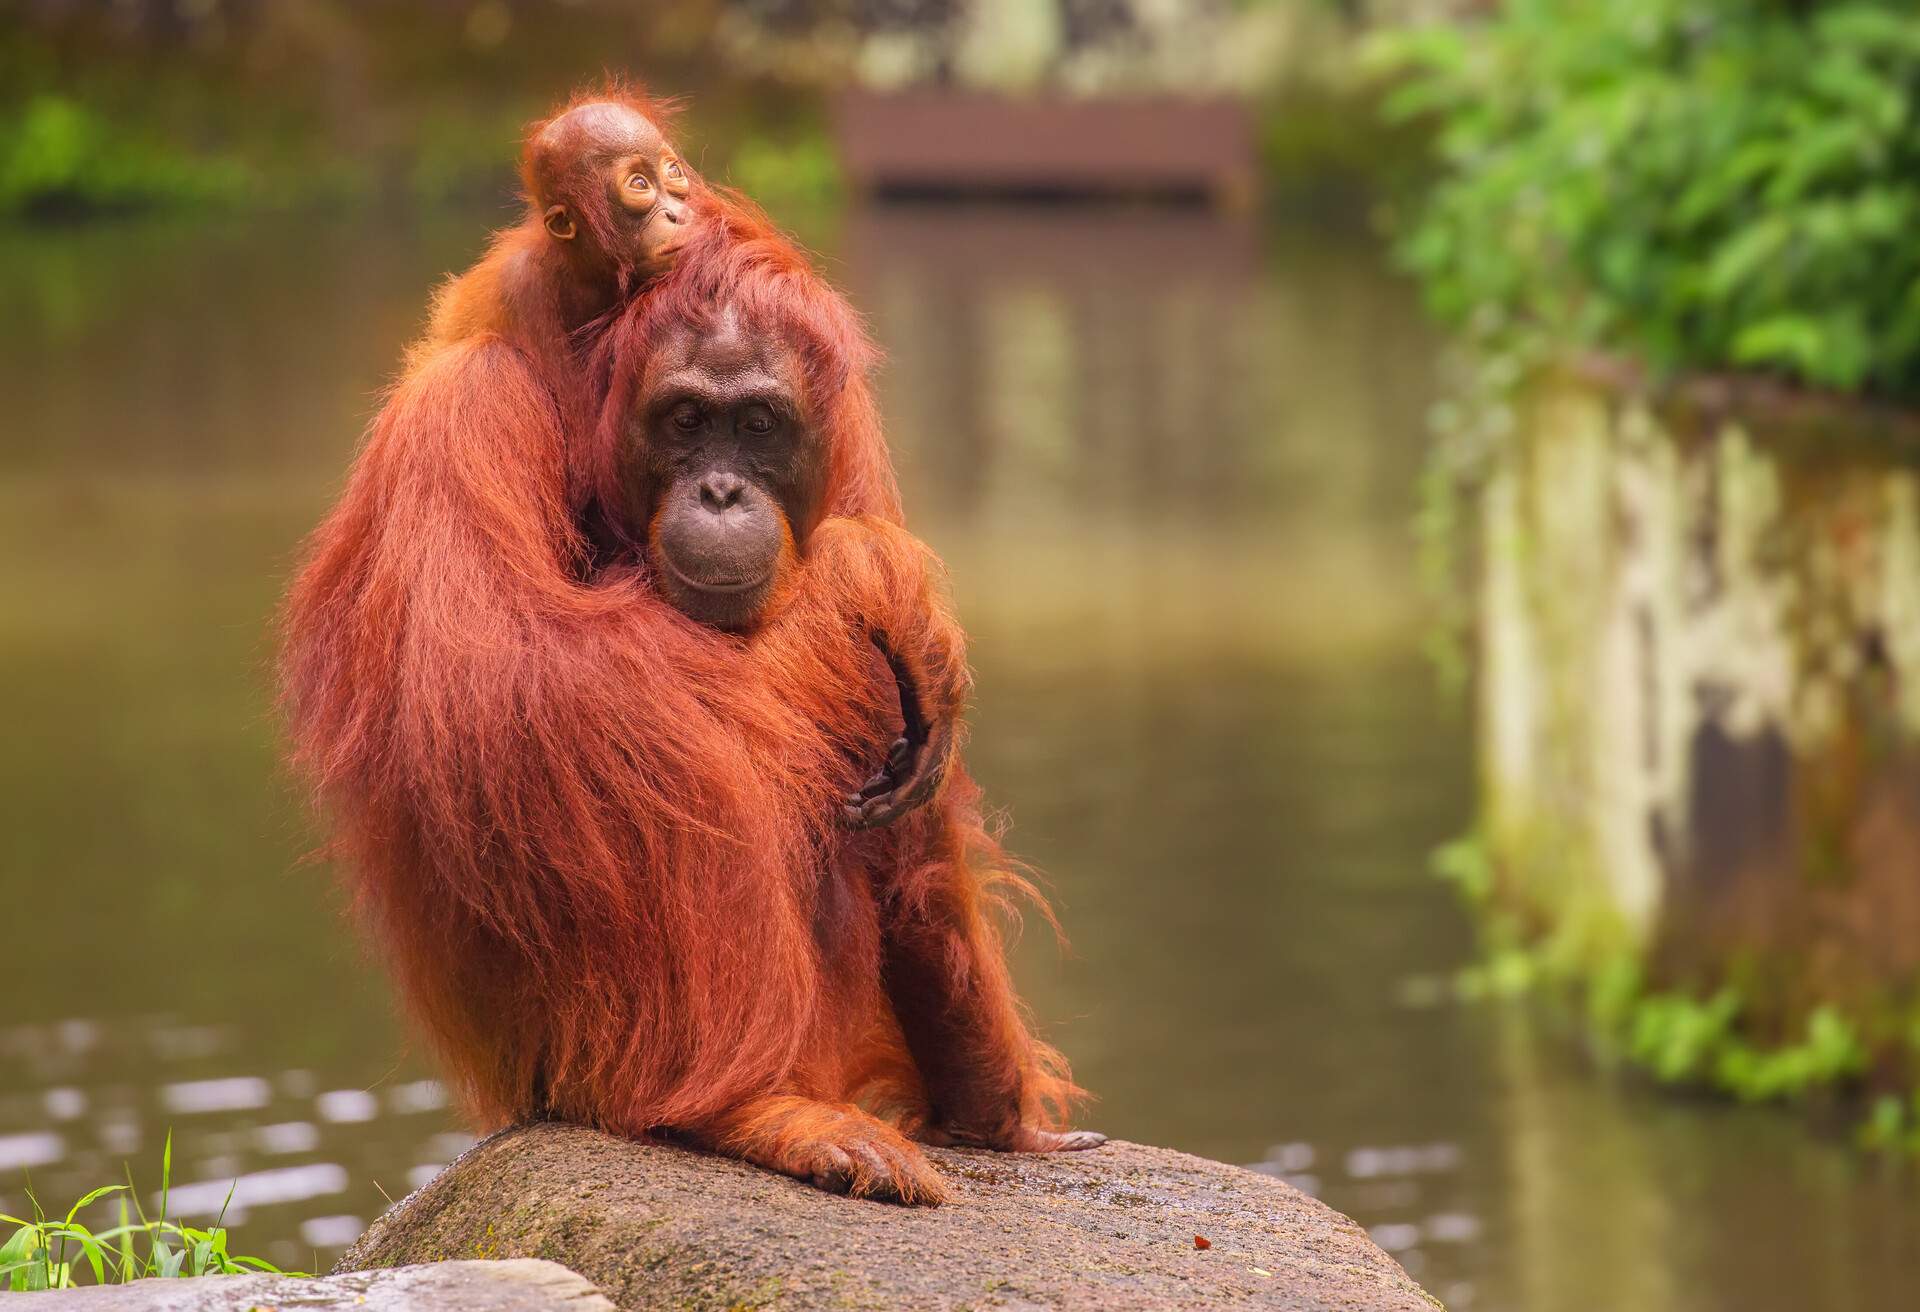 Orangutan in the Singapore Zoo at the tree; Shutterstock ID 289290284